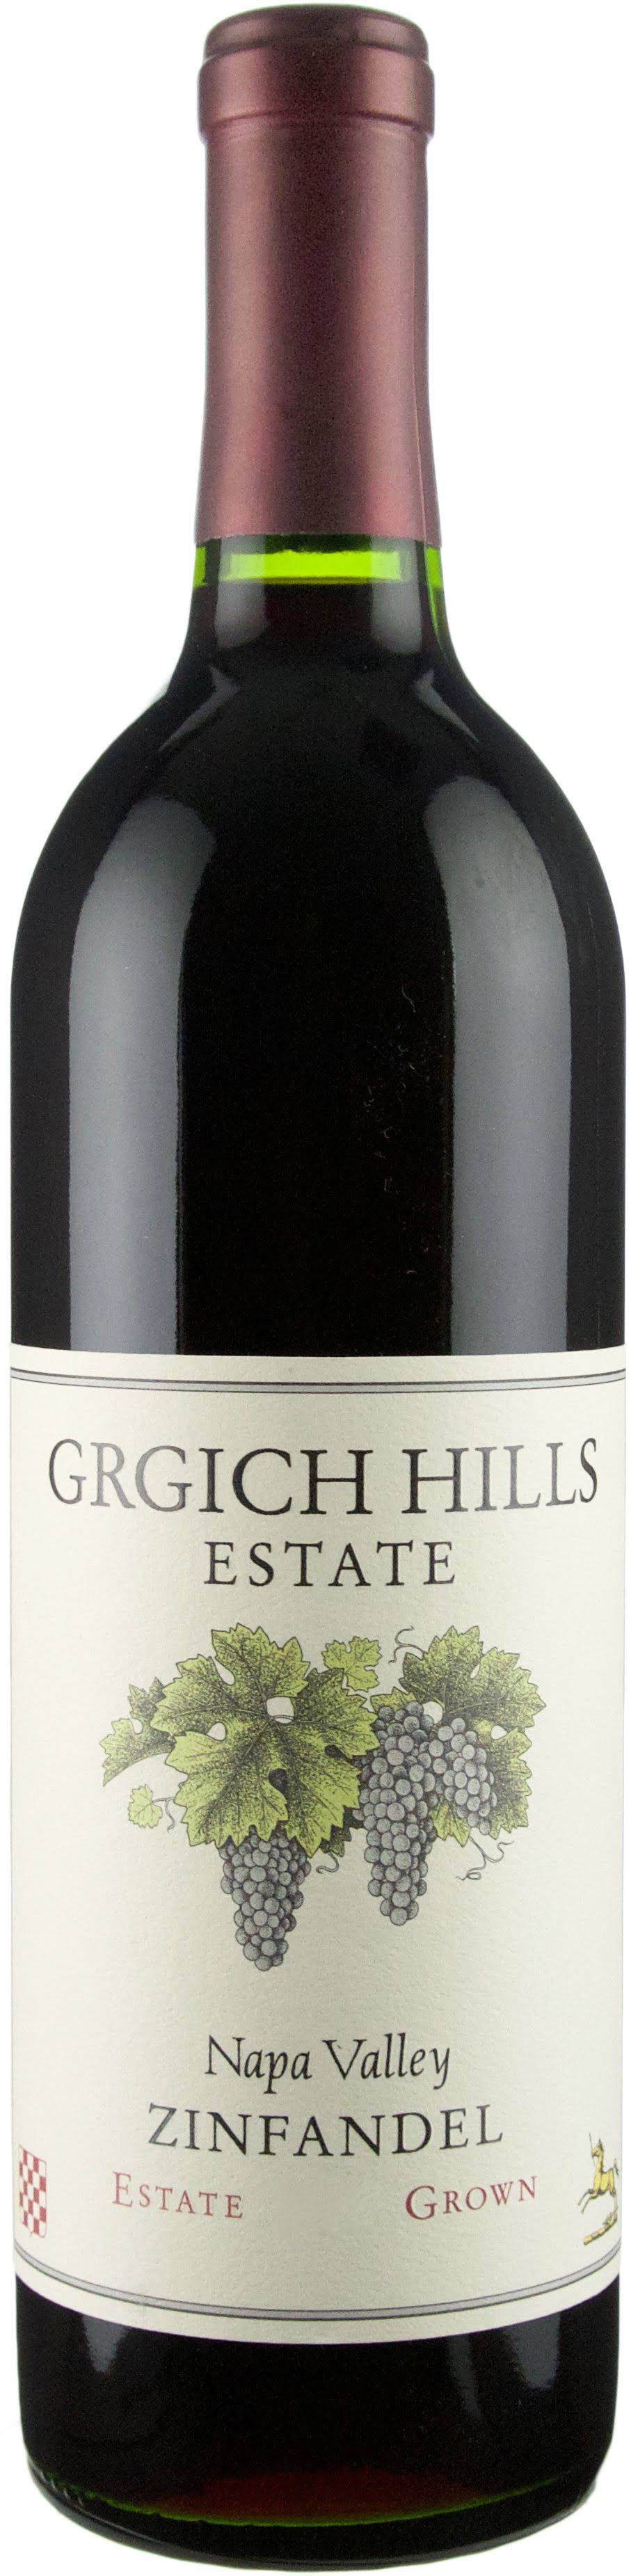 Grgich Hills Estate Napa Valley Zinfandel 2010 - California, USA